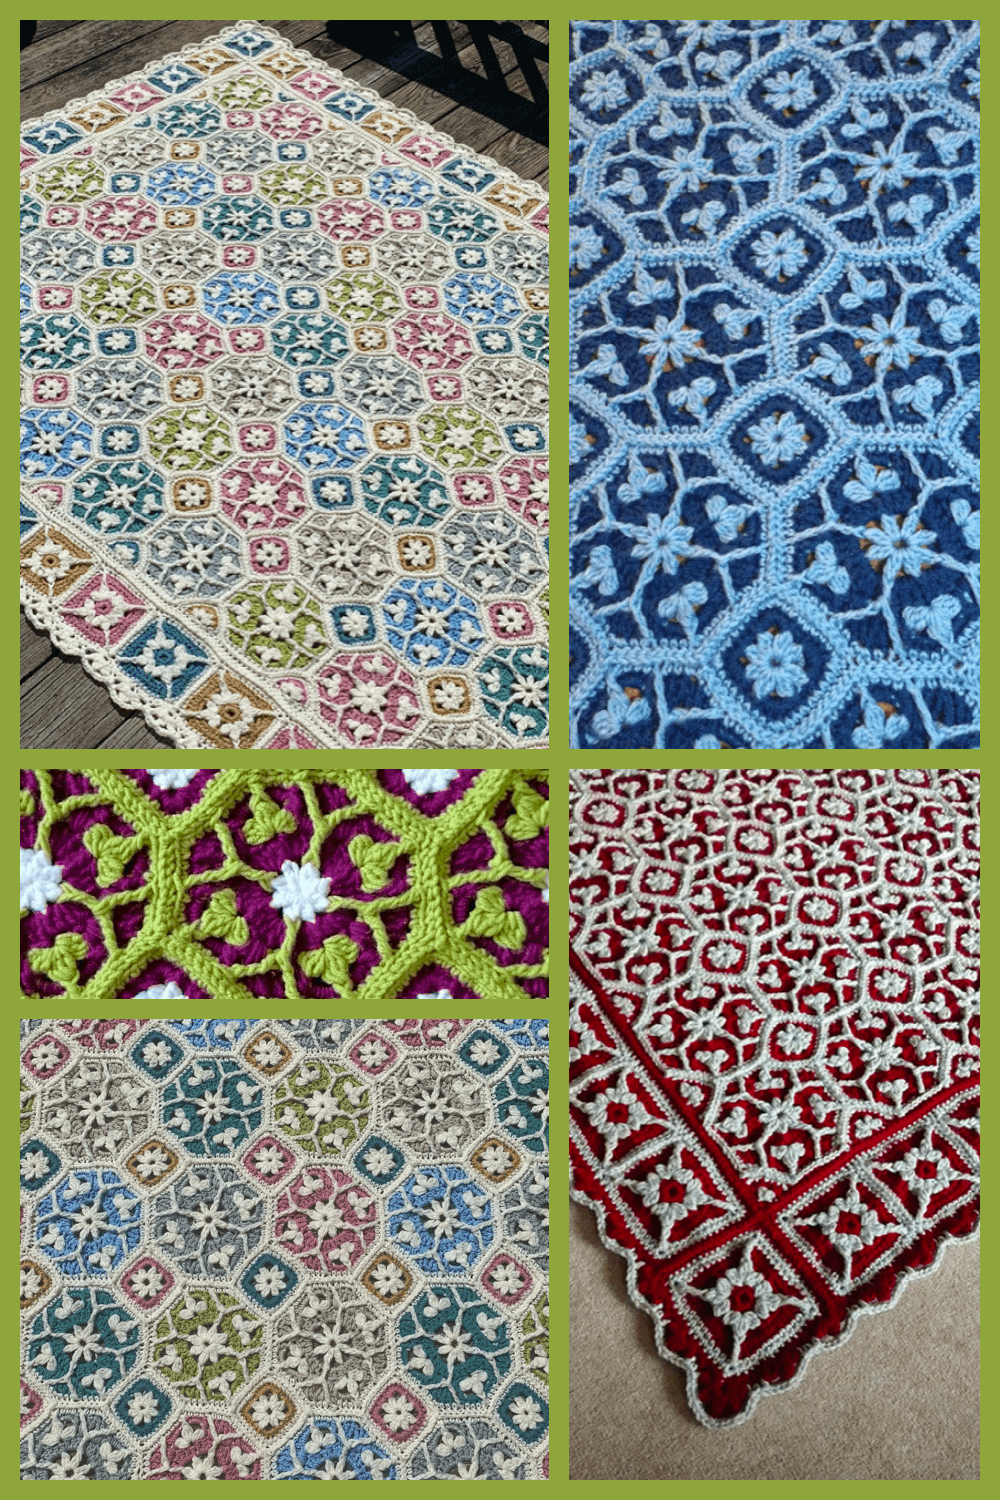 Multicolored pattern with graphics like mandala.